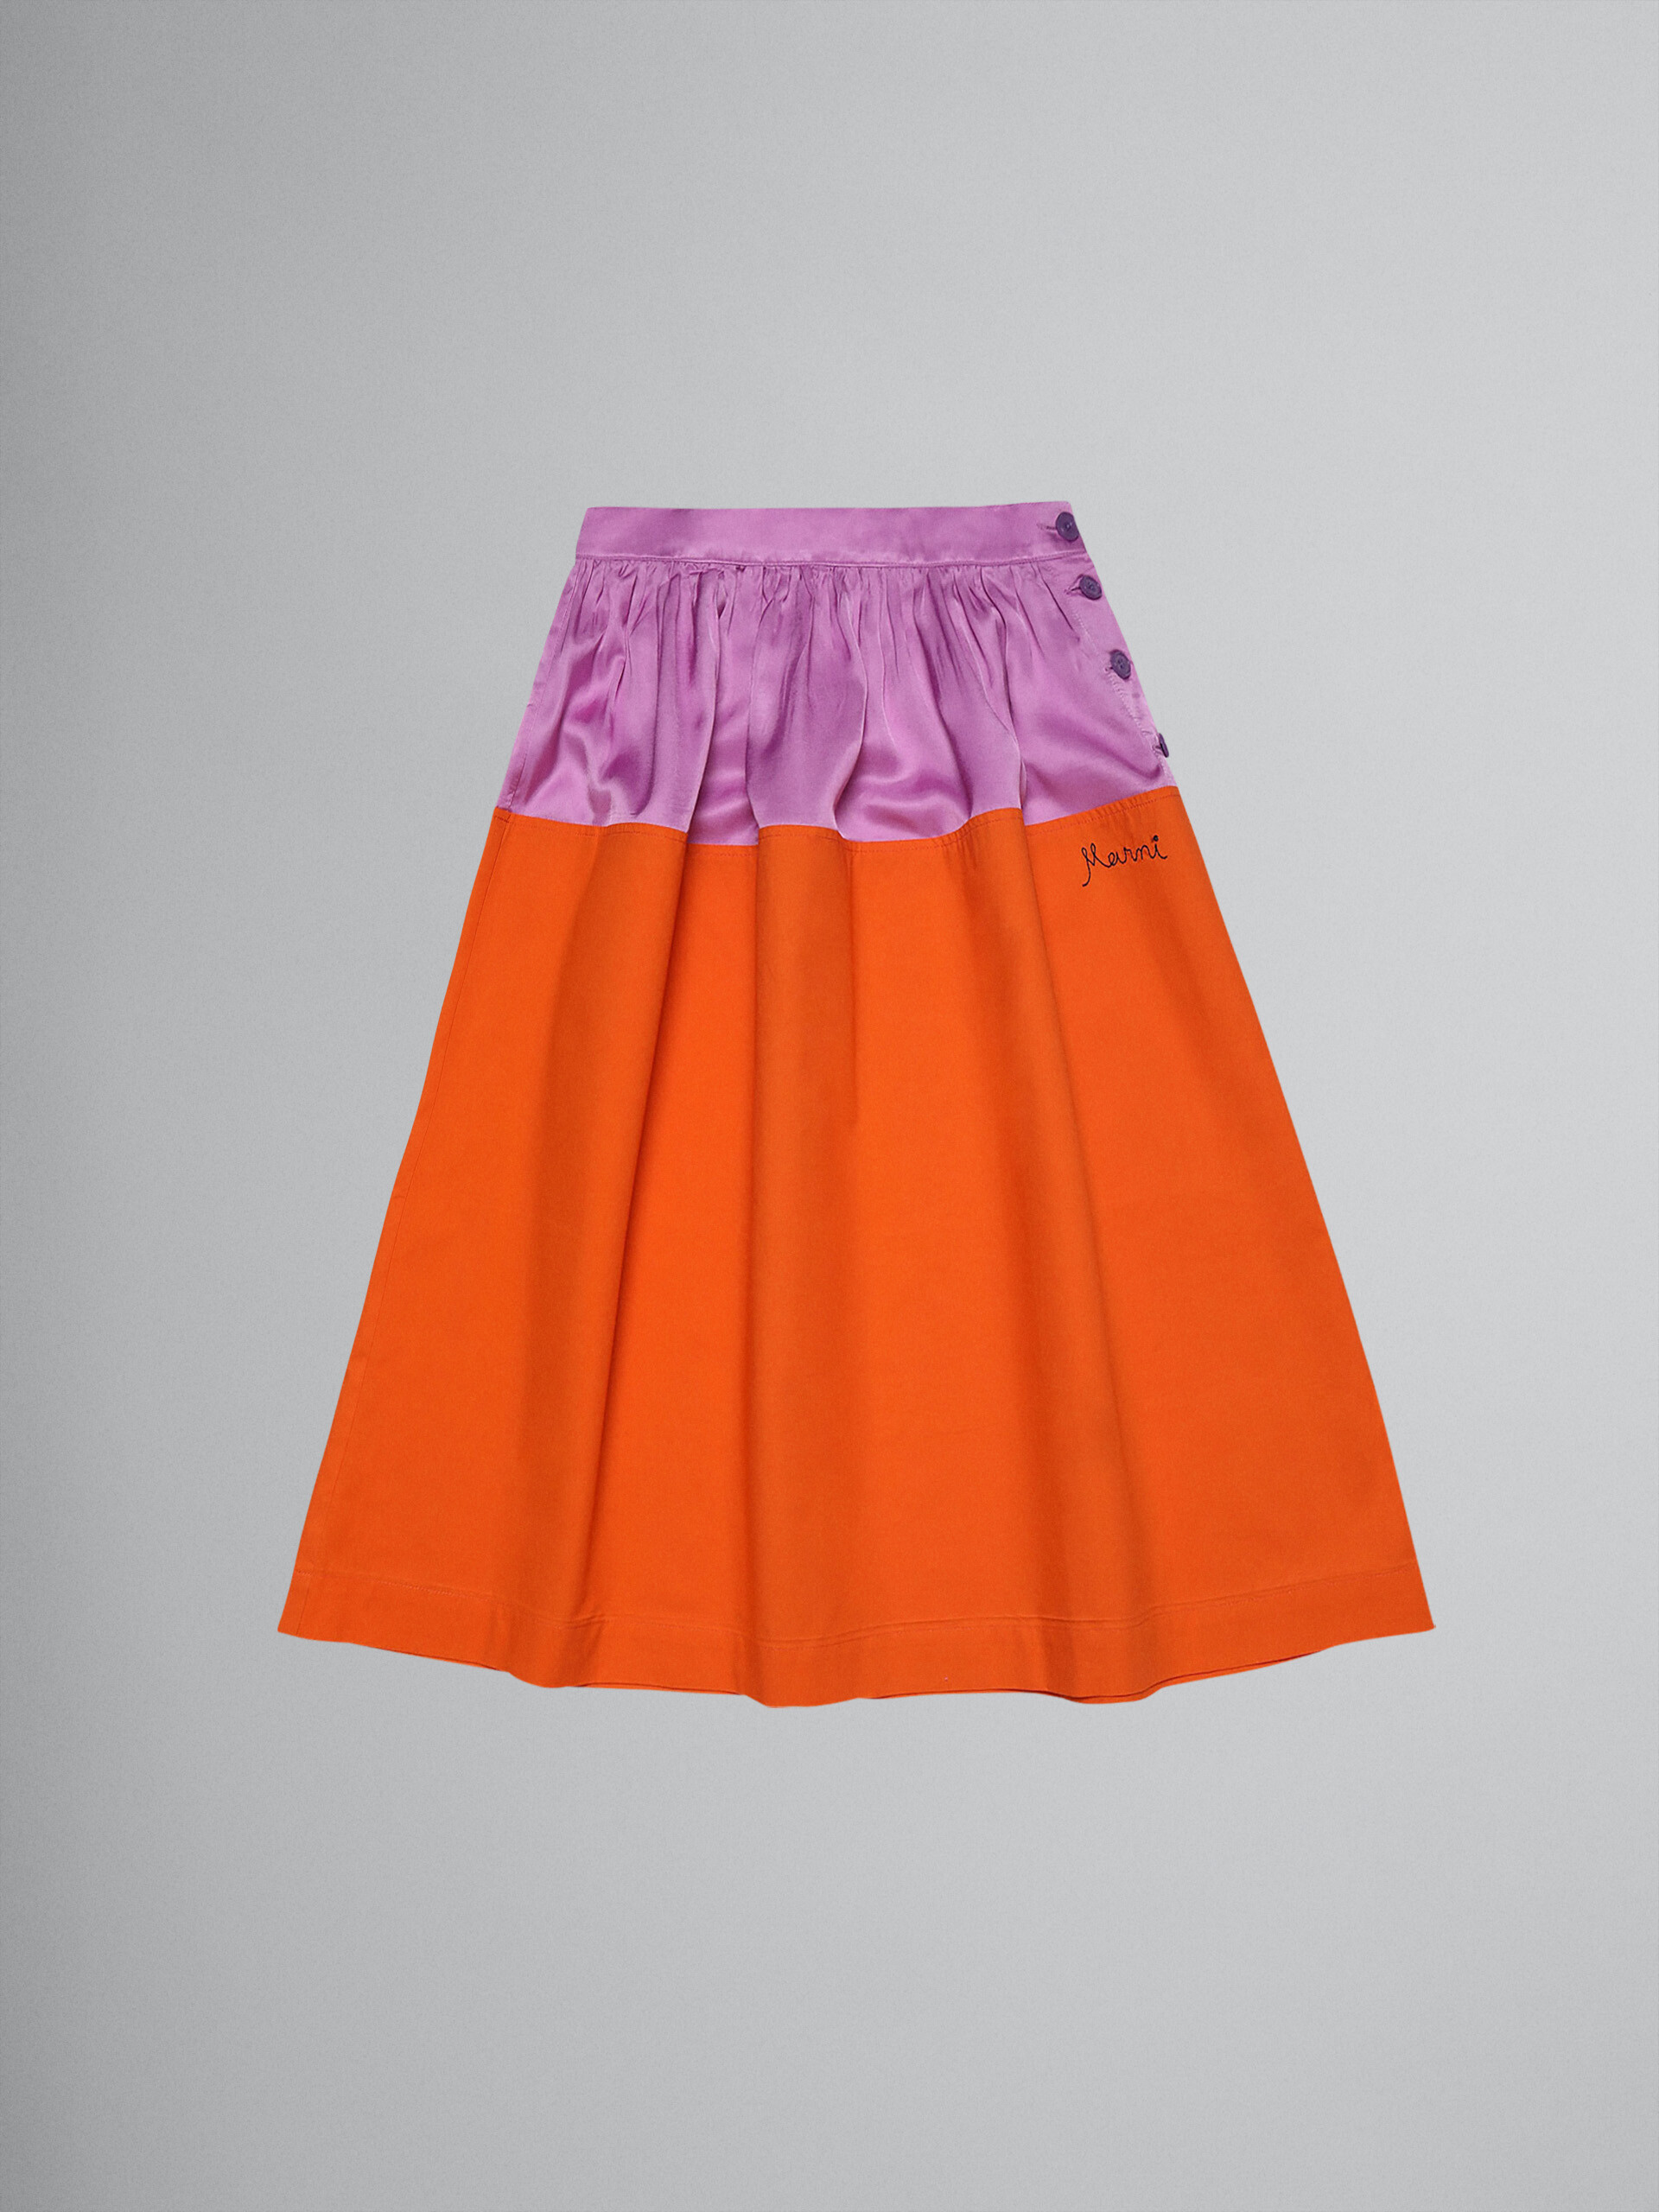 Cotton gabardine and satin skirt - Skirts - Image 1